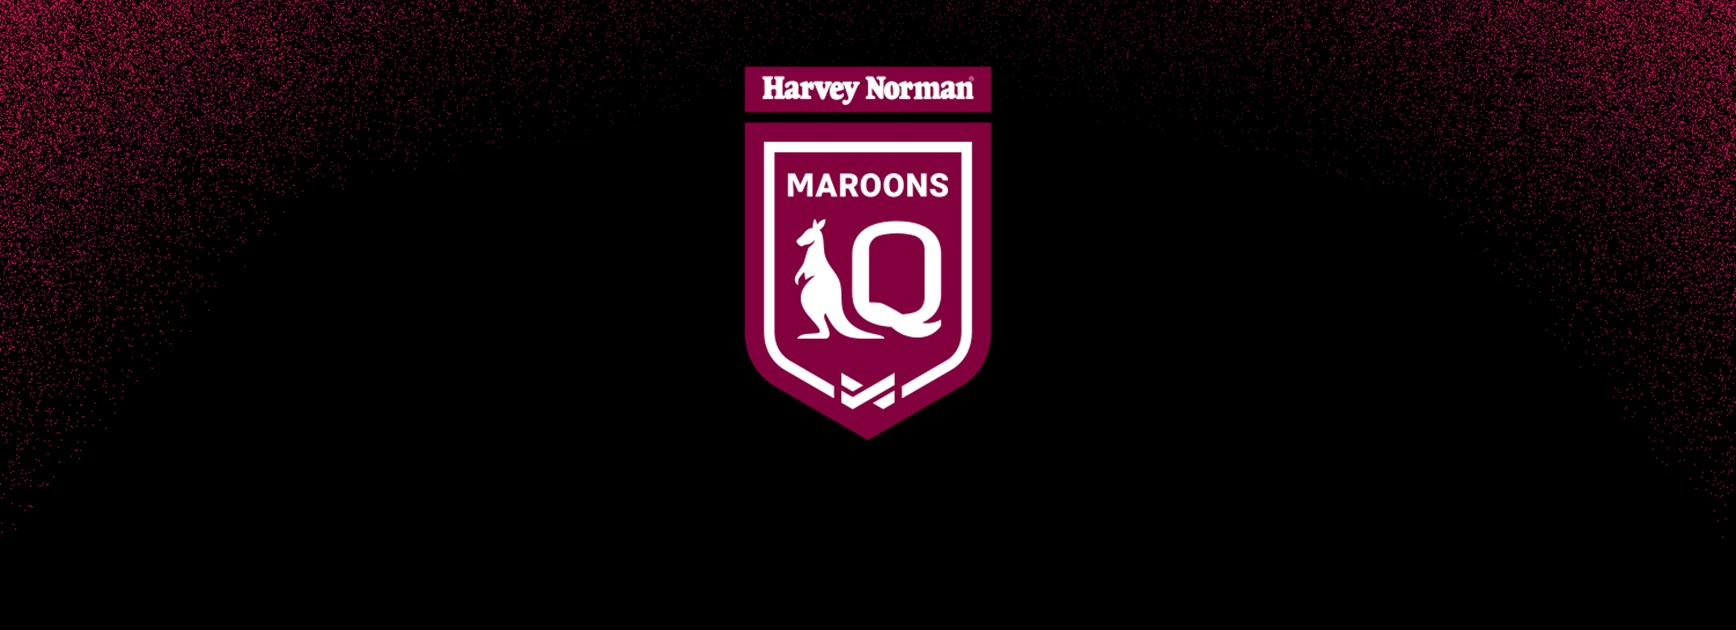 Harvey Norman Queensland Maroons squad named